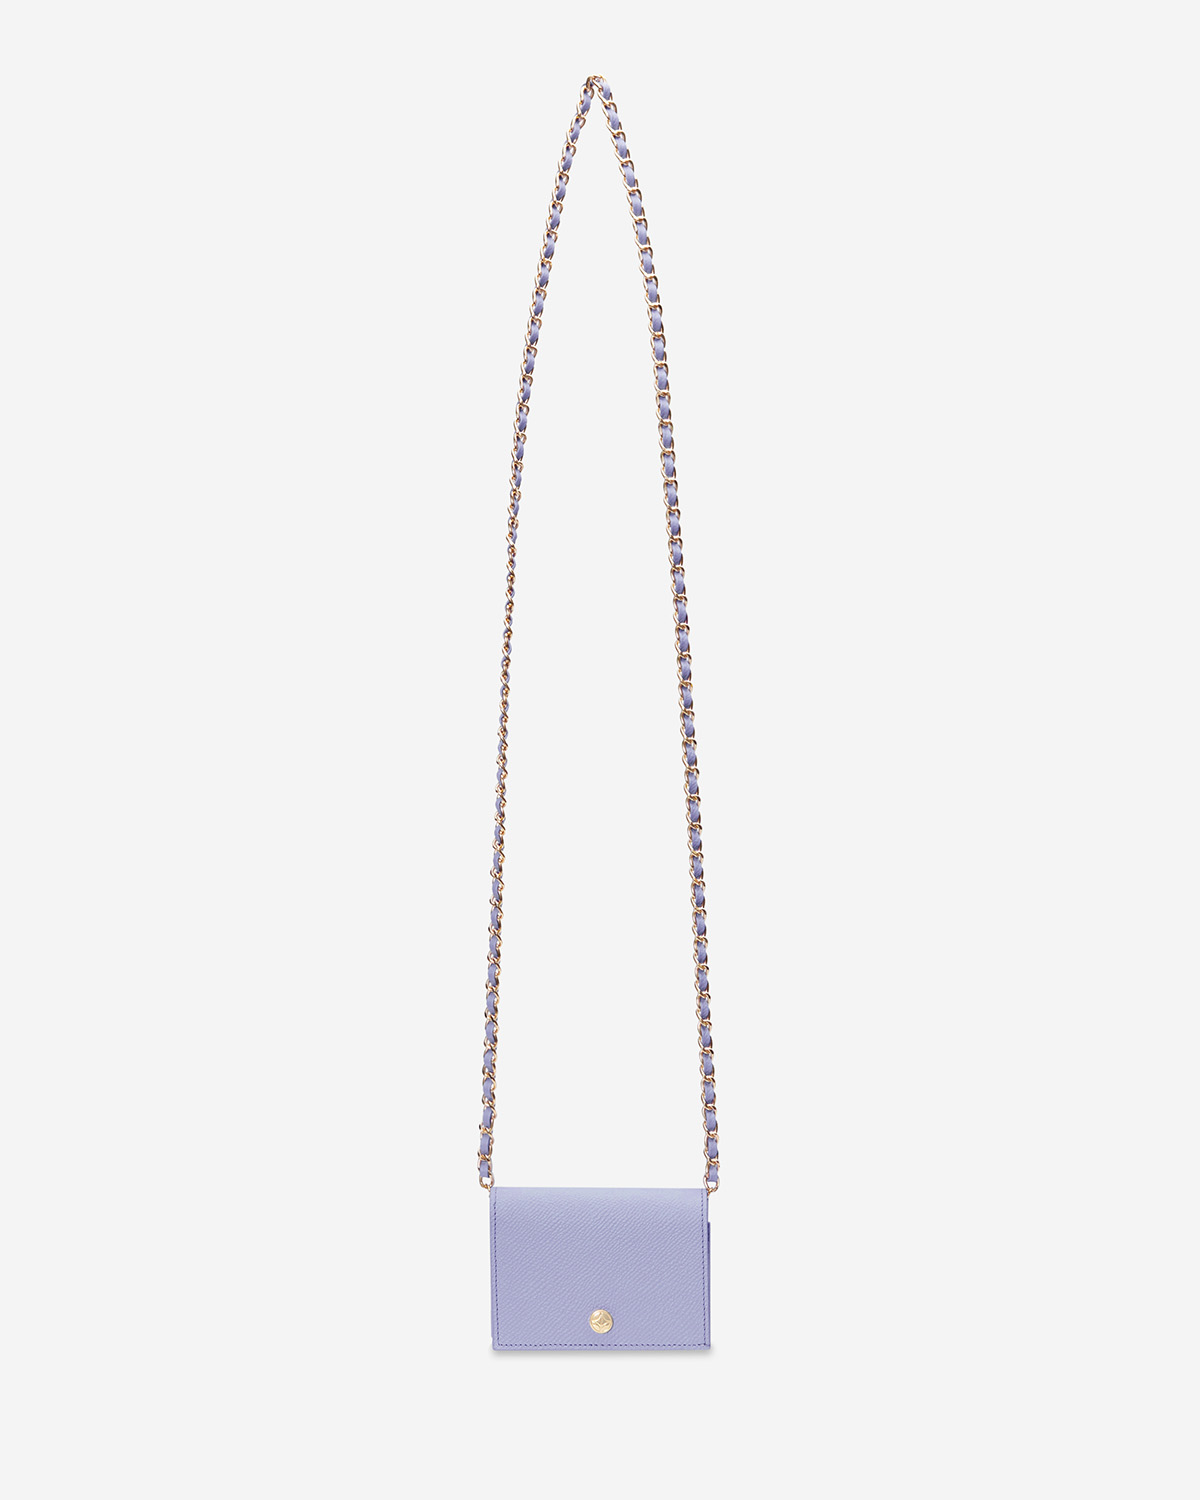 VERA Emily Flap Wallet with Leather Braided Gold Chain in Charming Purple กระเป๋าสตางค์หนังแท้ แบบเปิดฝา พร้อมสายโซ่สีทองร้อยหนัง สีม่วง